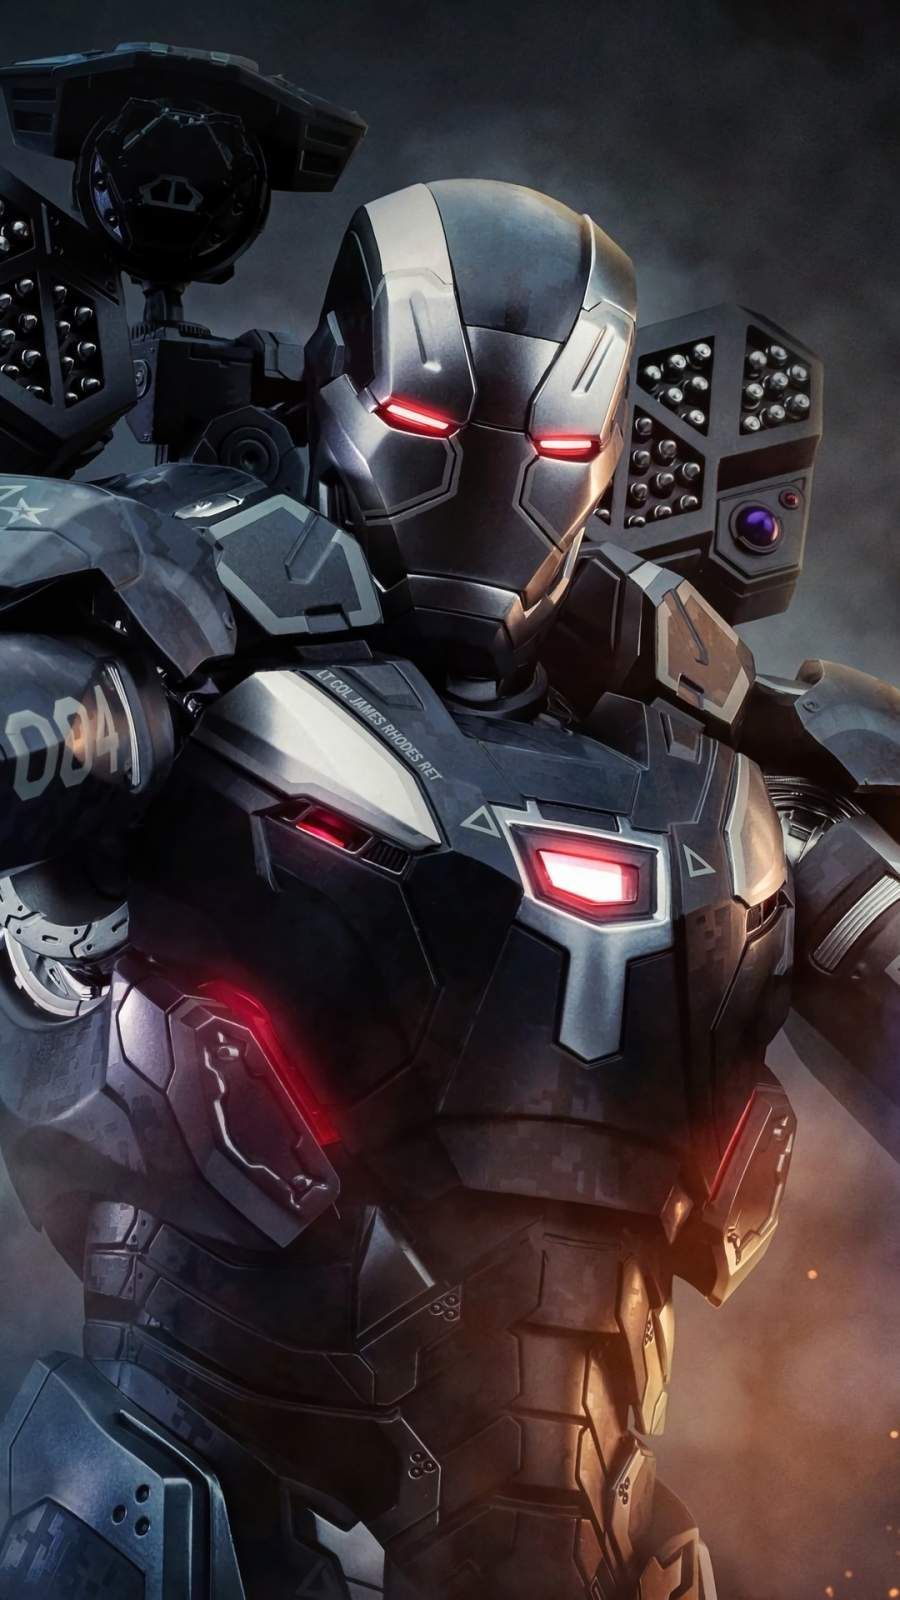 War Machine 4k iPhone Wallpaper. Marvel superhero posters, Iron man avengers, Iron man